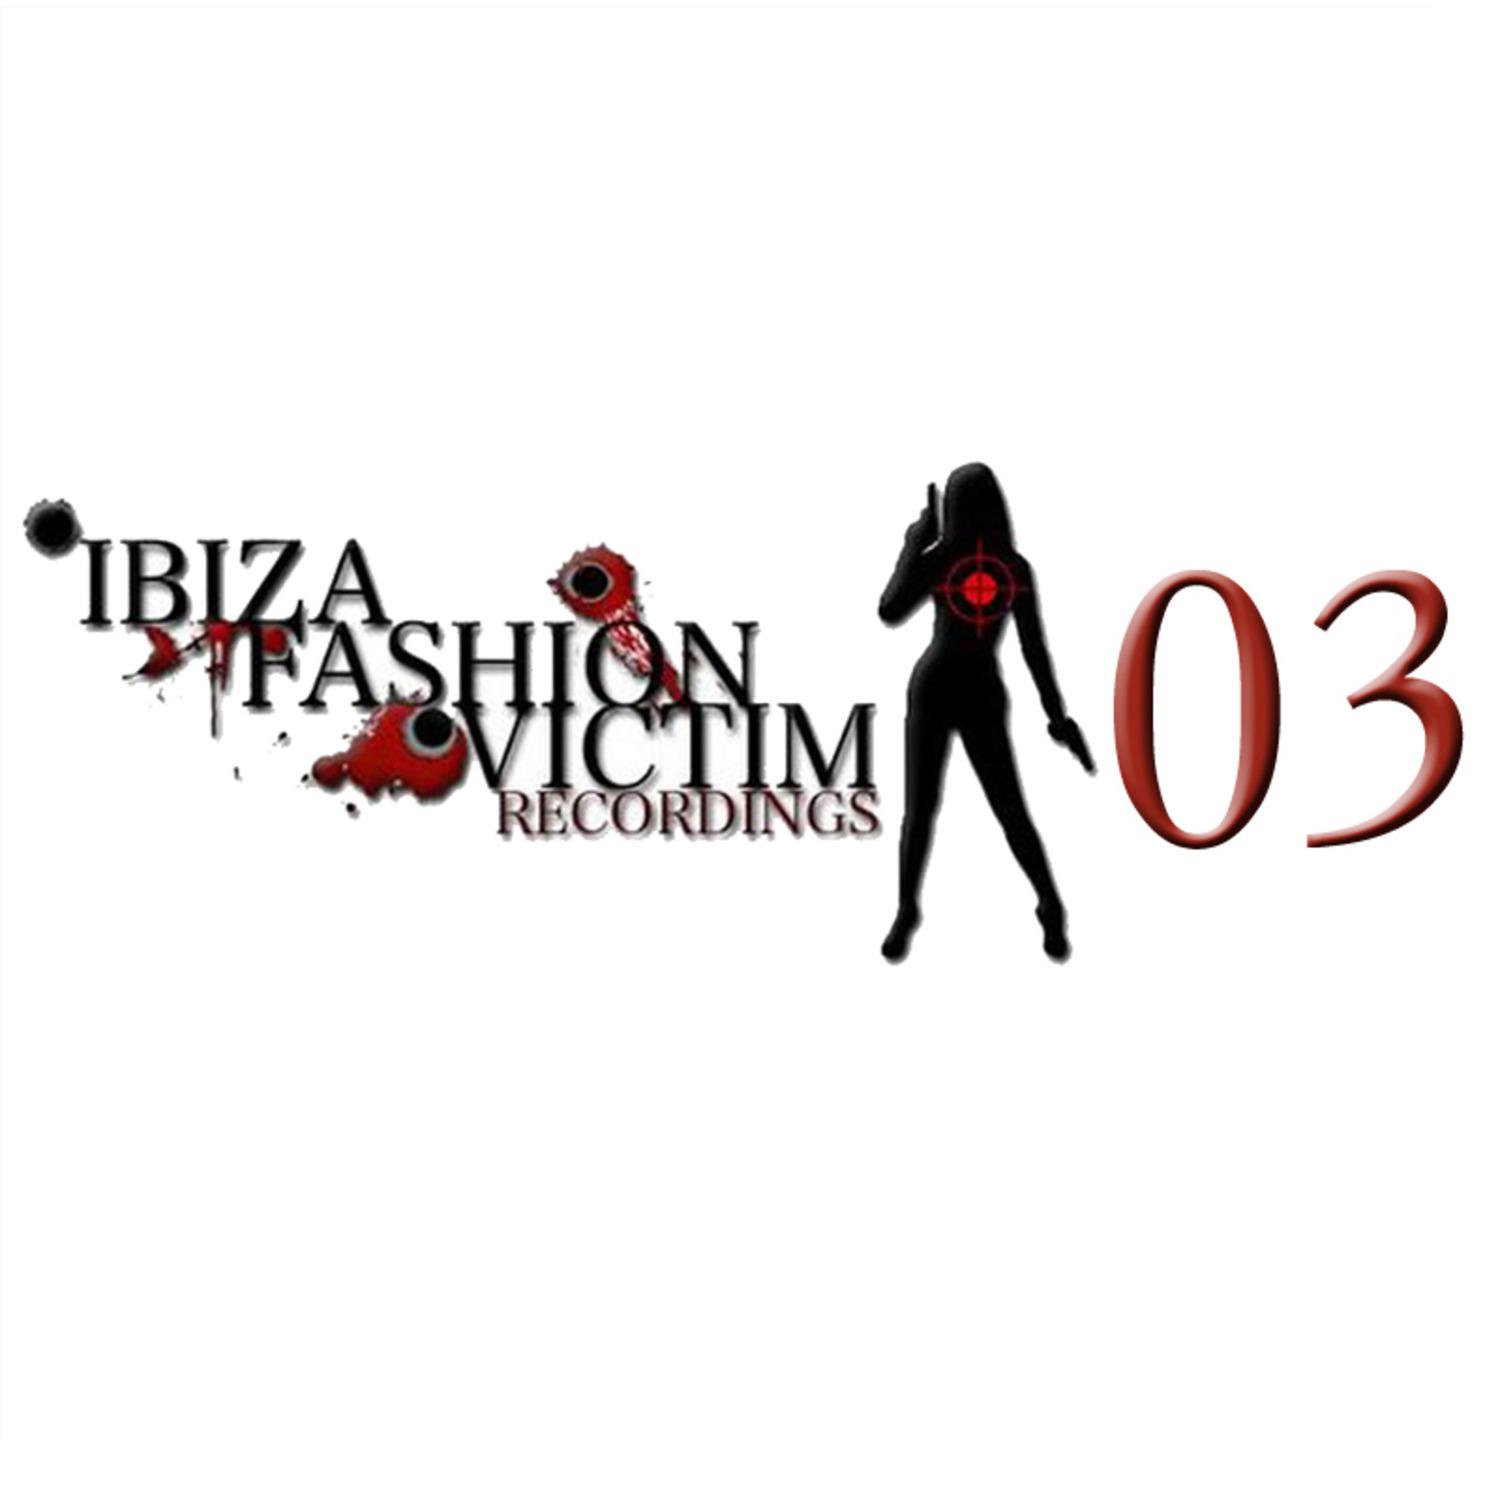 Ibiza Fashion Victim Recordings 03